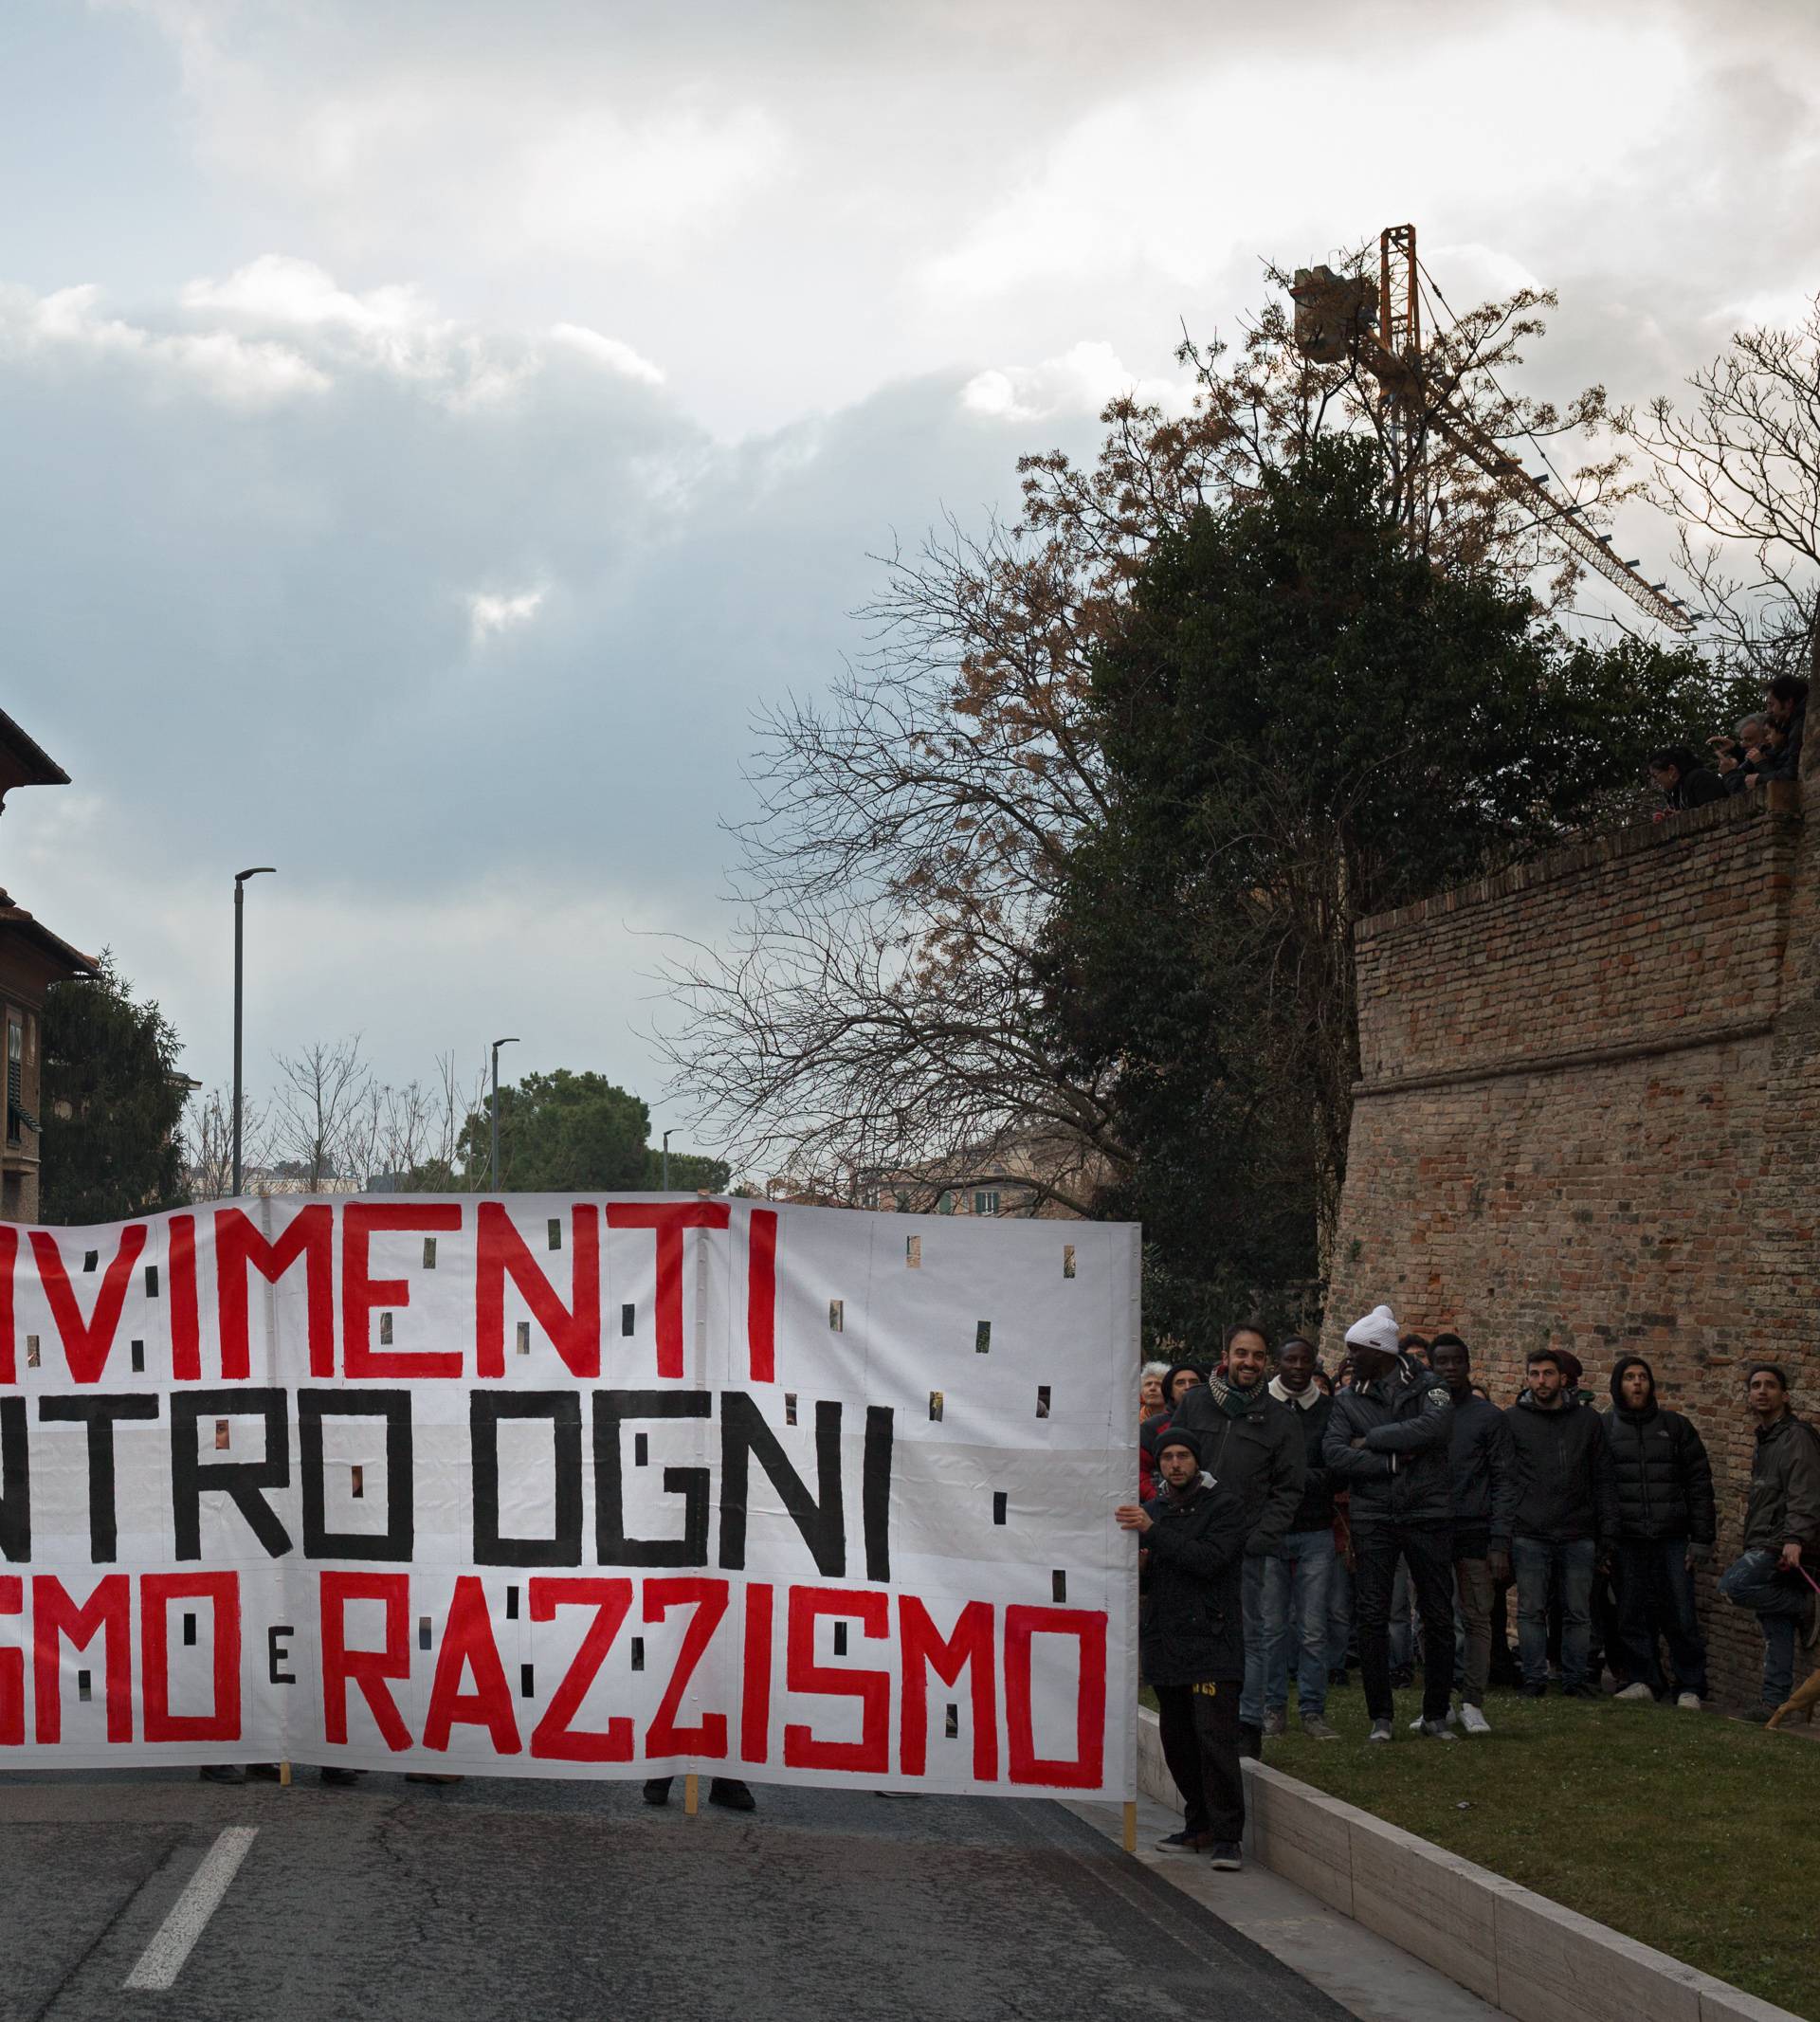 Macerata: Demonstration against fascism and racism